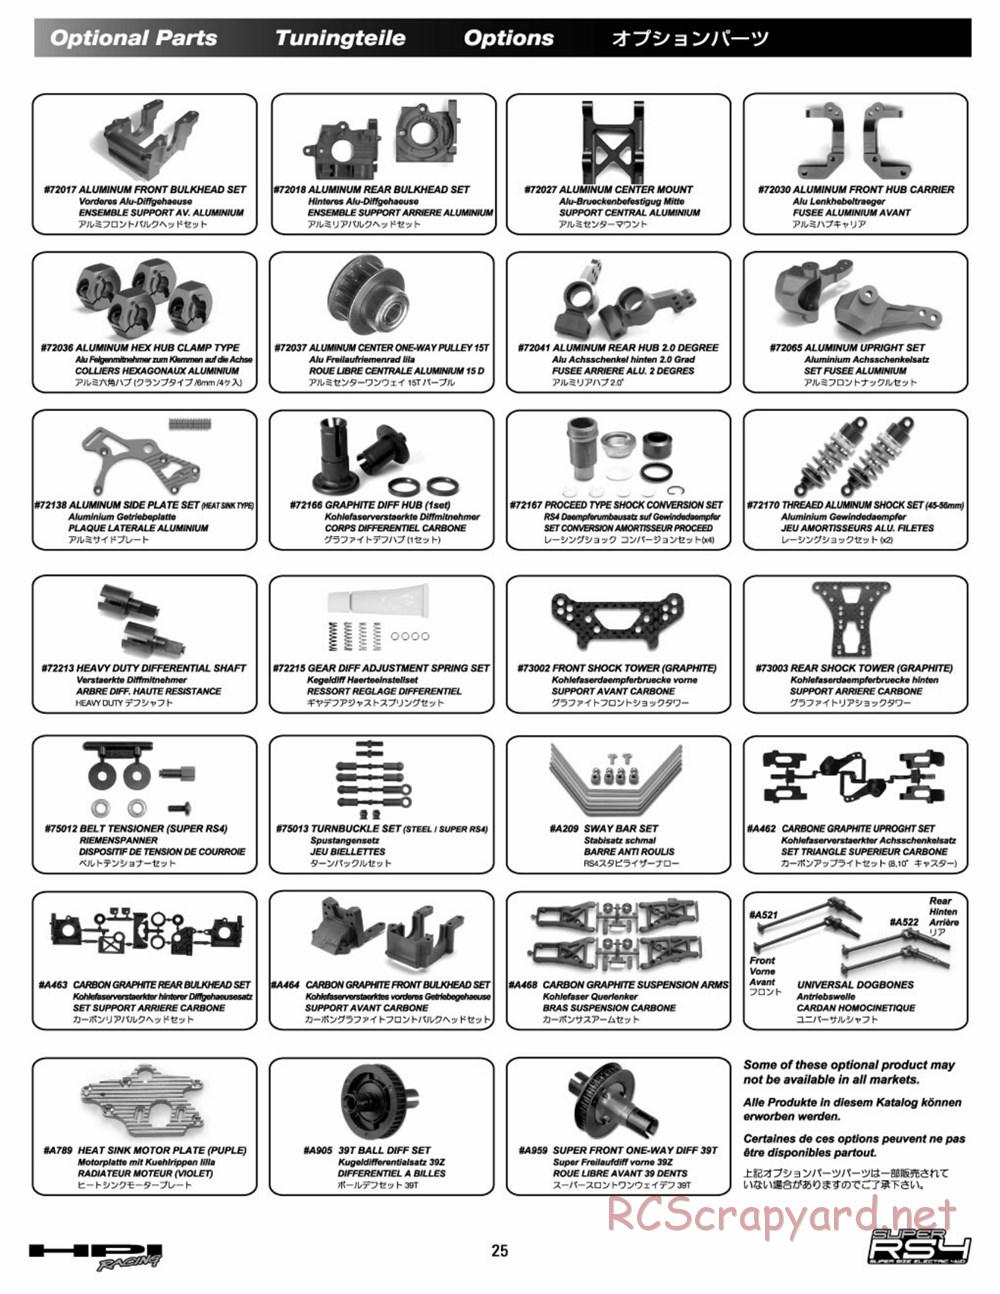 HPI - Super RS4 - Manual - Page 24